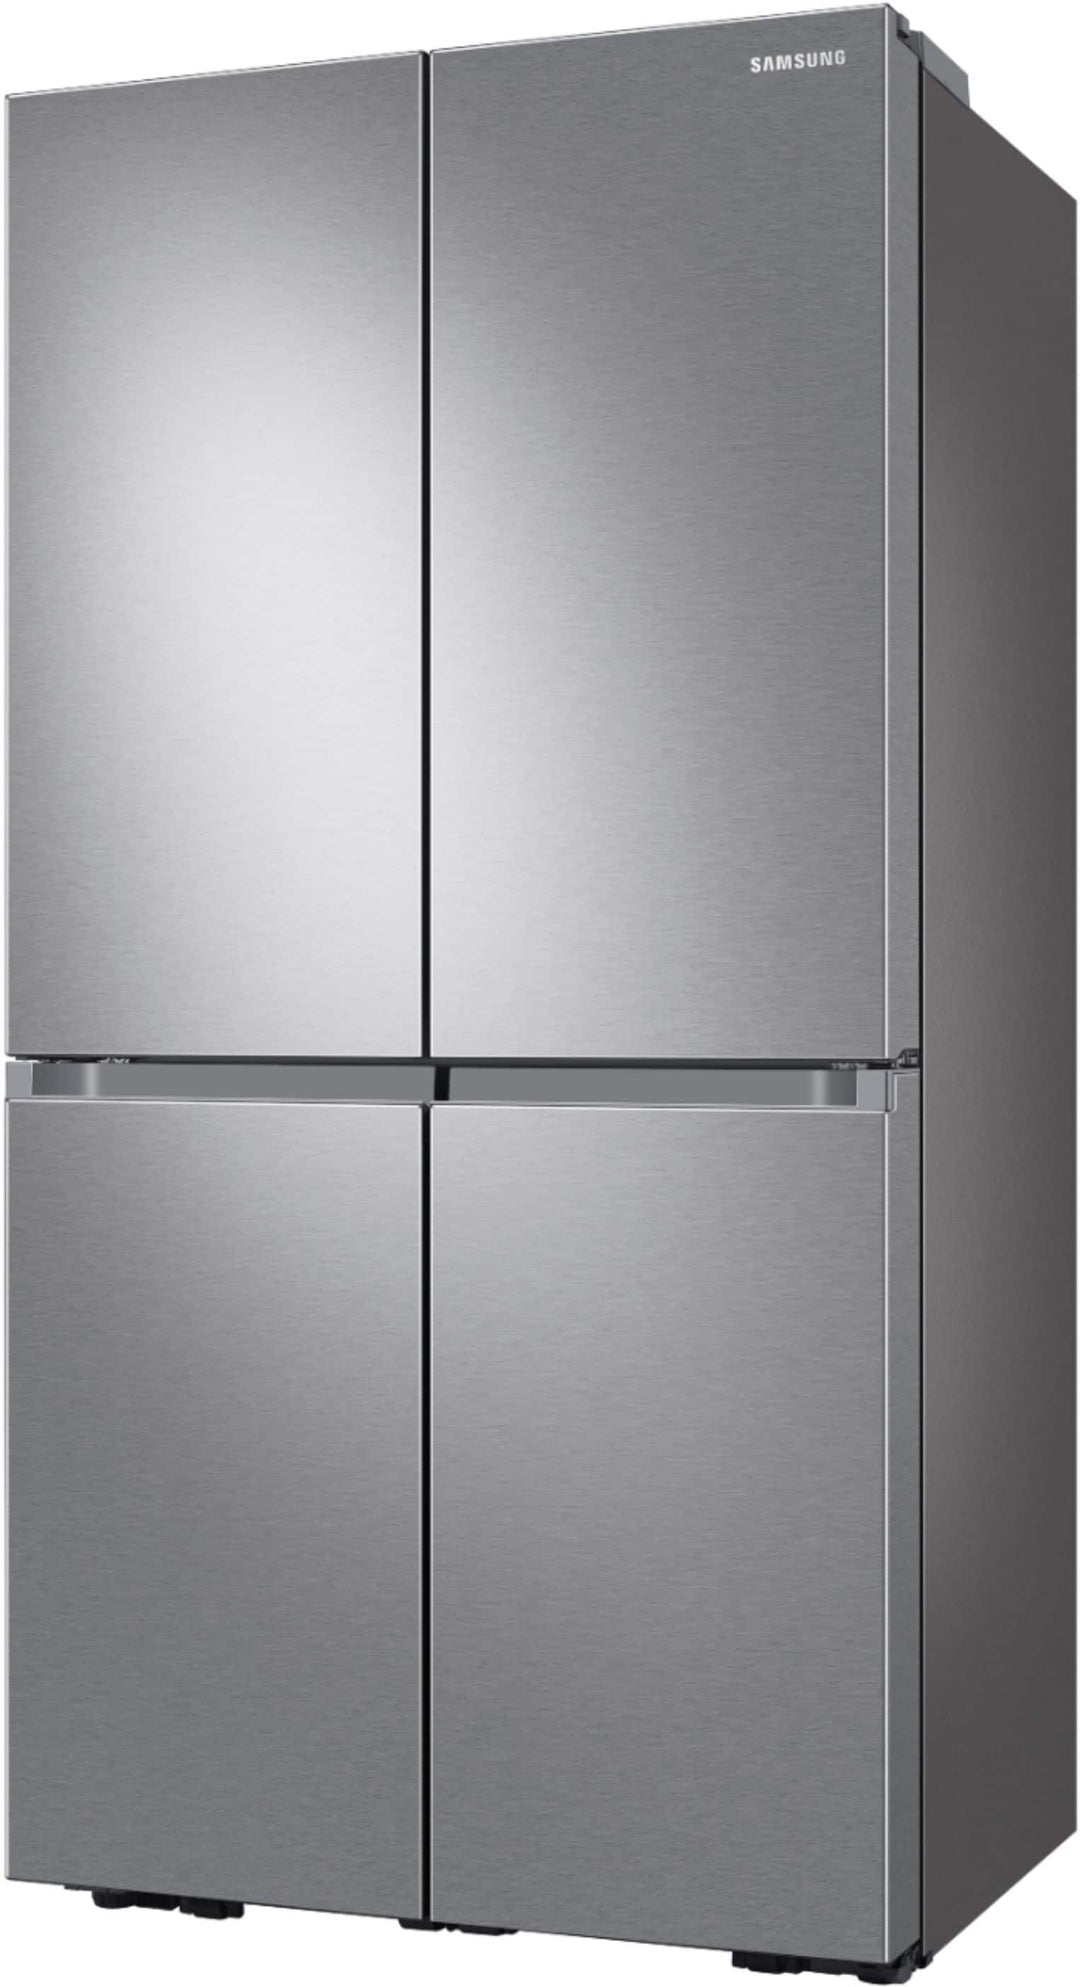 Samsung - 23 cu. ft. 4-Door Flex French Door Counter Depth Refrigerator with WiFi, Beverage Center and Dual Ice Maker - Stainless steel_1